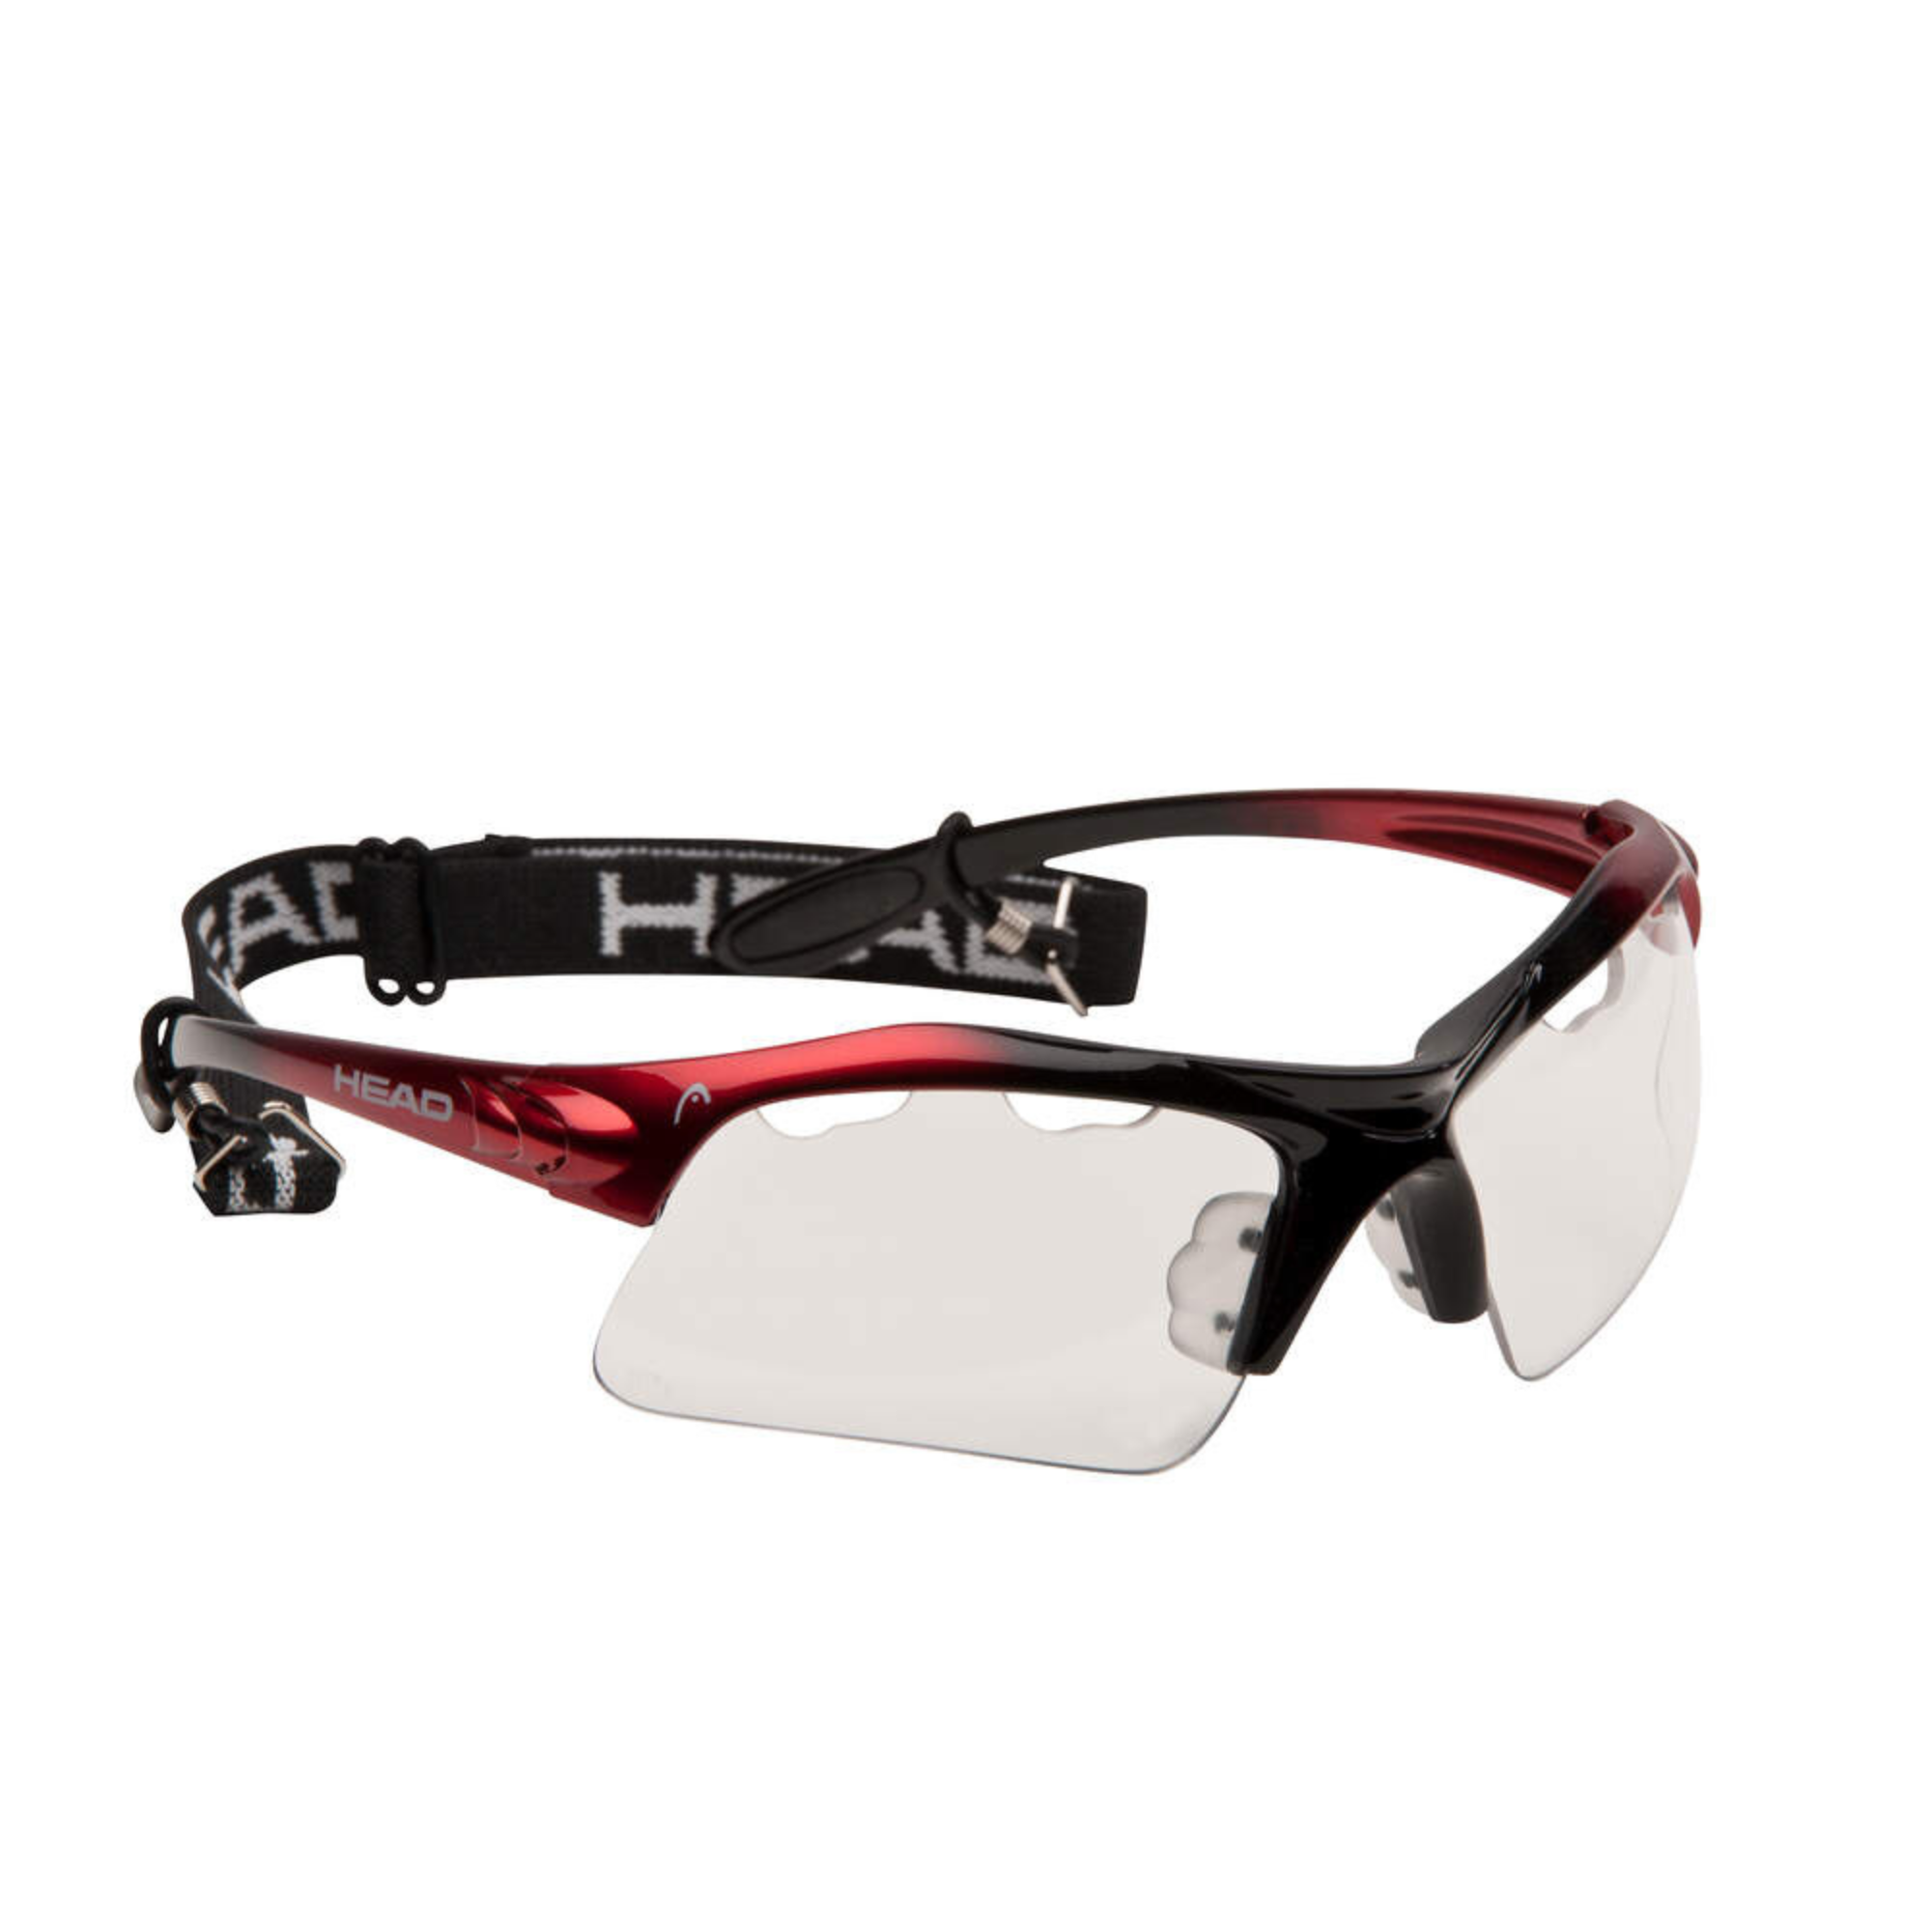 eyewear goggles for racquet sports such as tennis, pickleball, racquetball, squash, padel